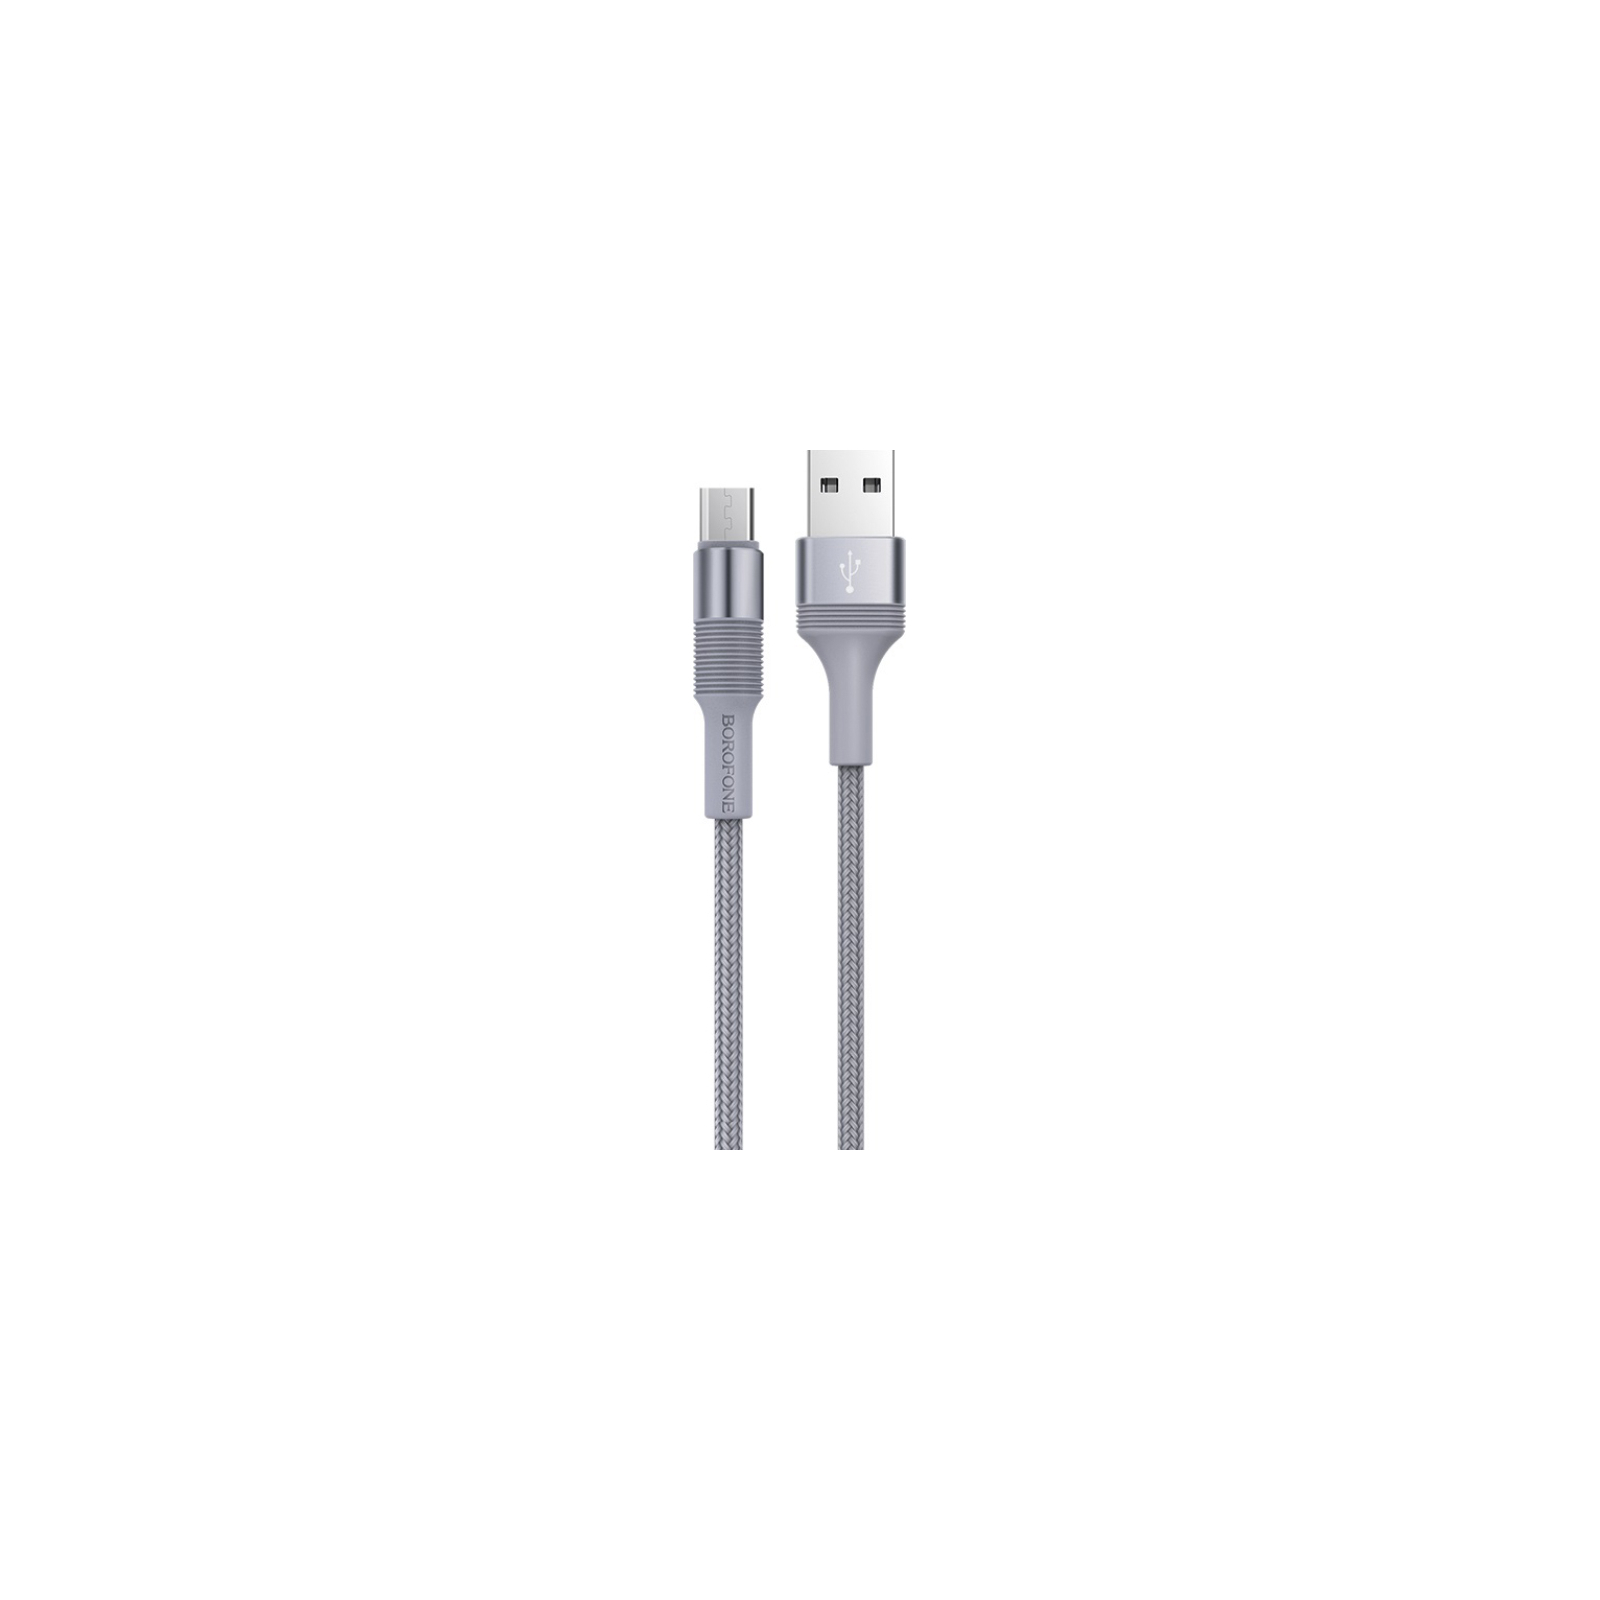 Дата кабель USB 2.0 AM to Micro 5P 1.0m BX21 Outstanding 2.4A Gray BOROFONE (BX21MMG)